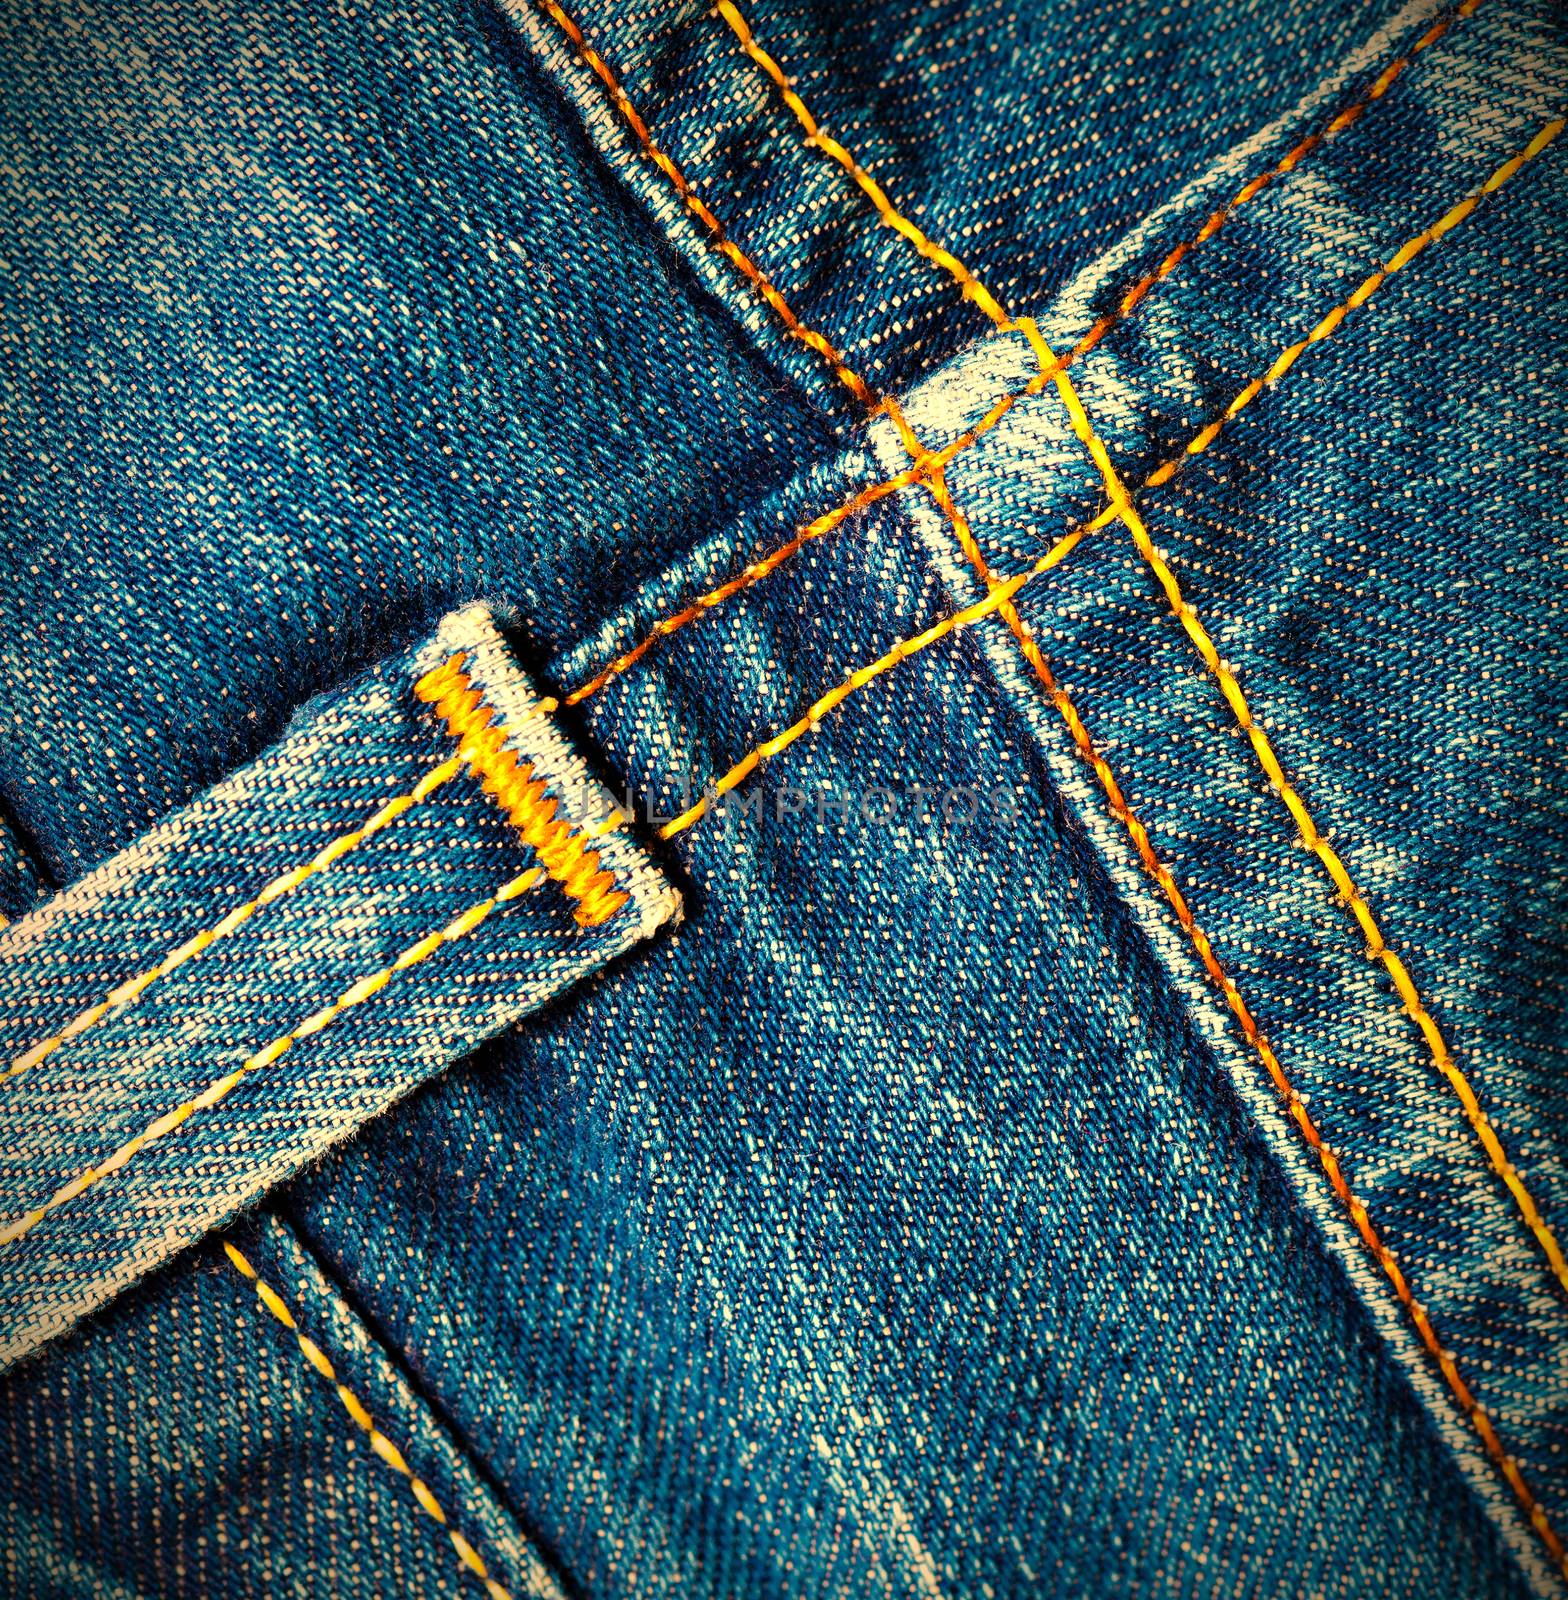 vintage blue jeans close up. instagram image retro style